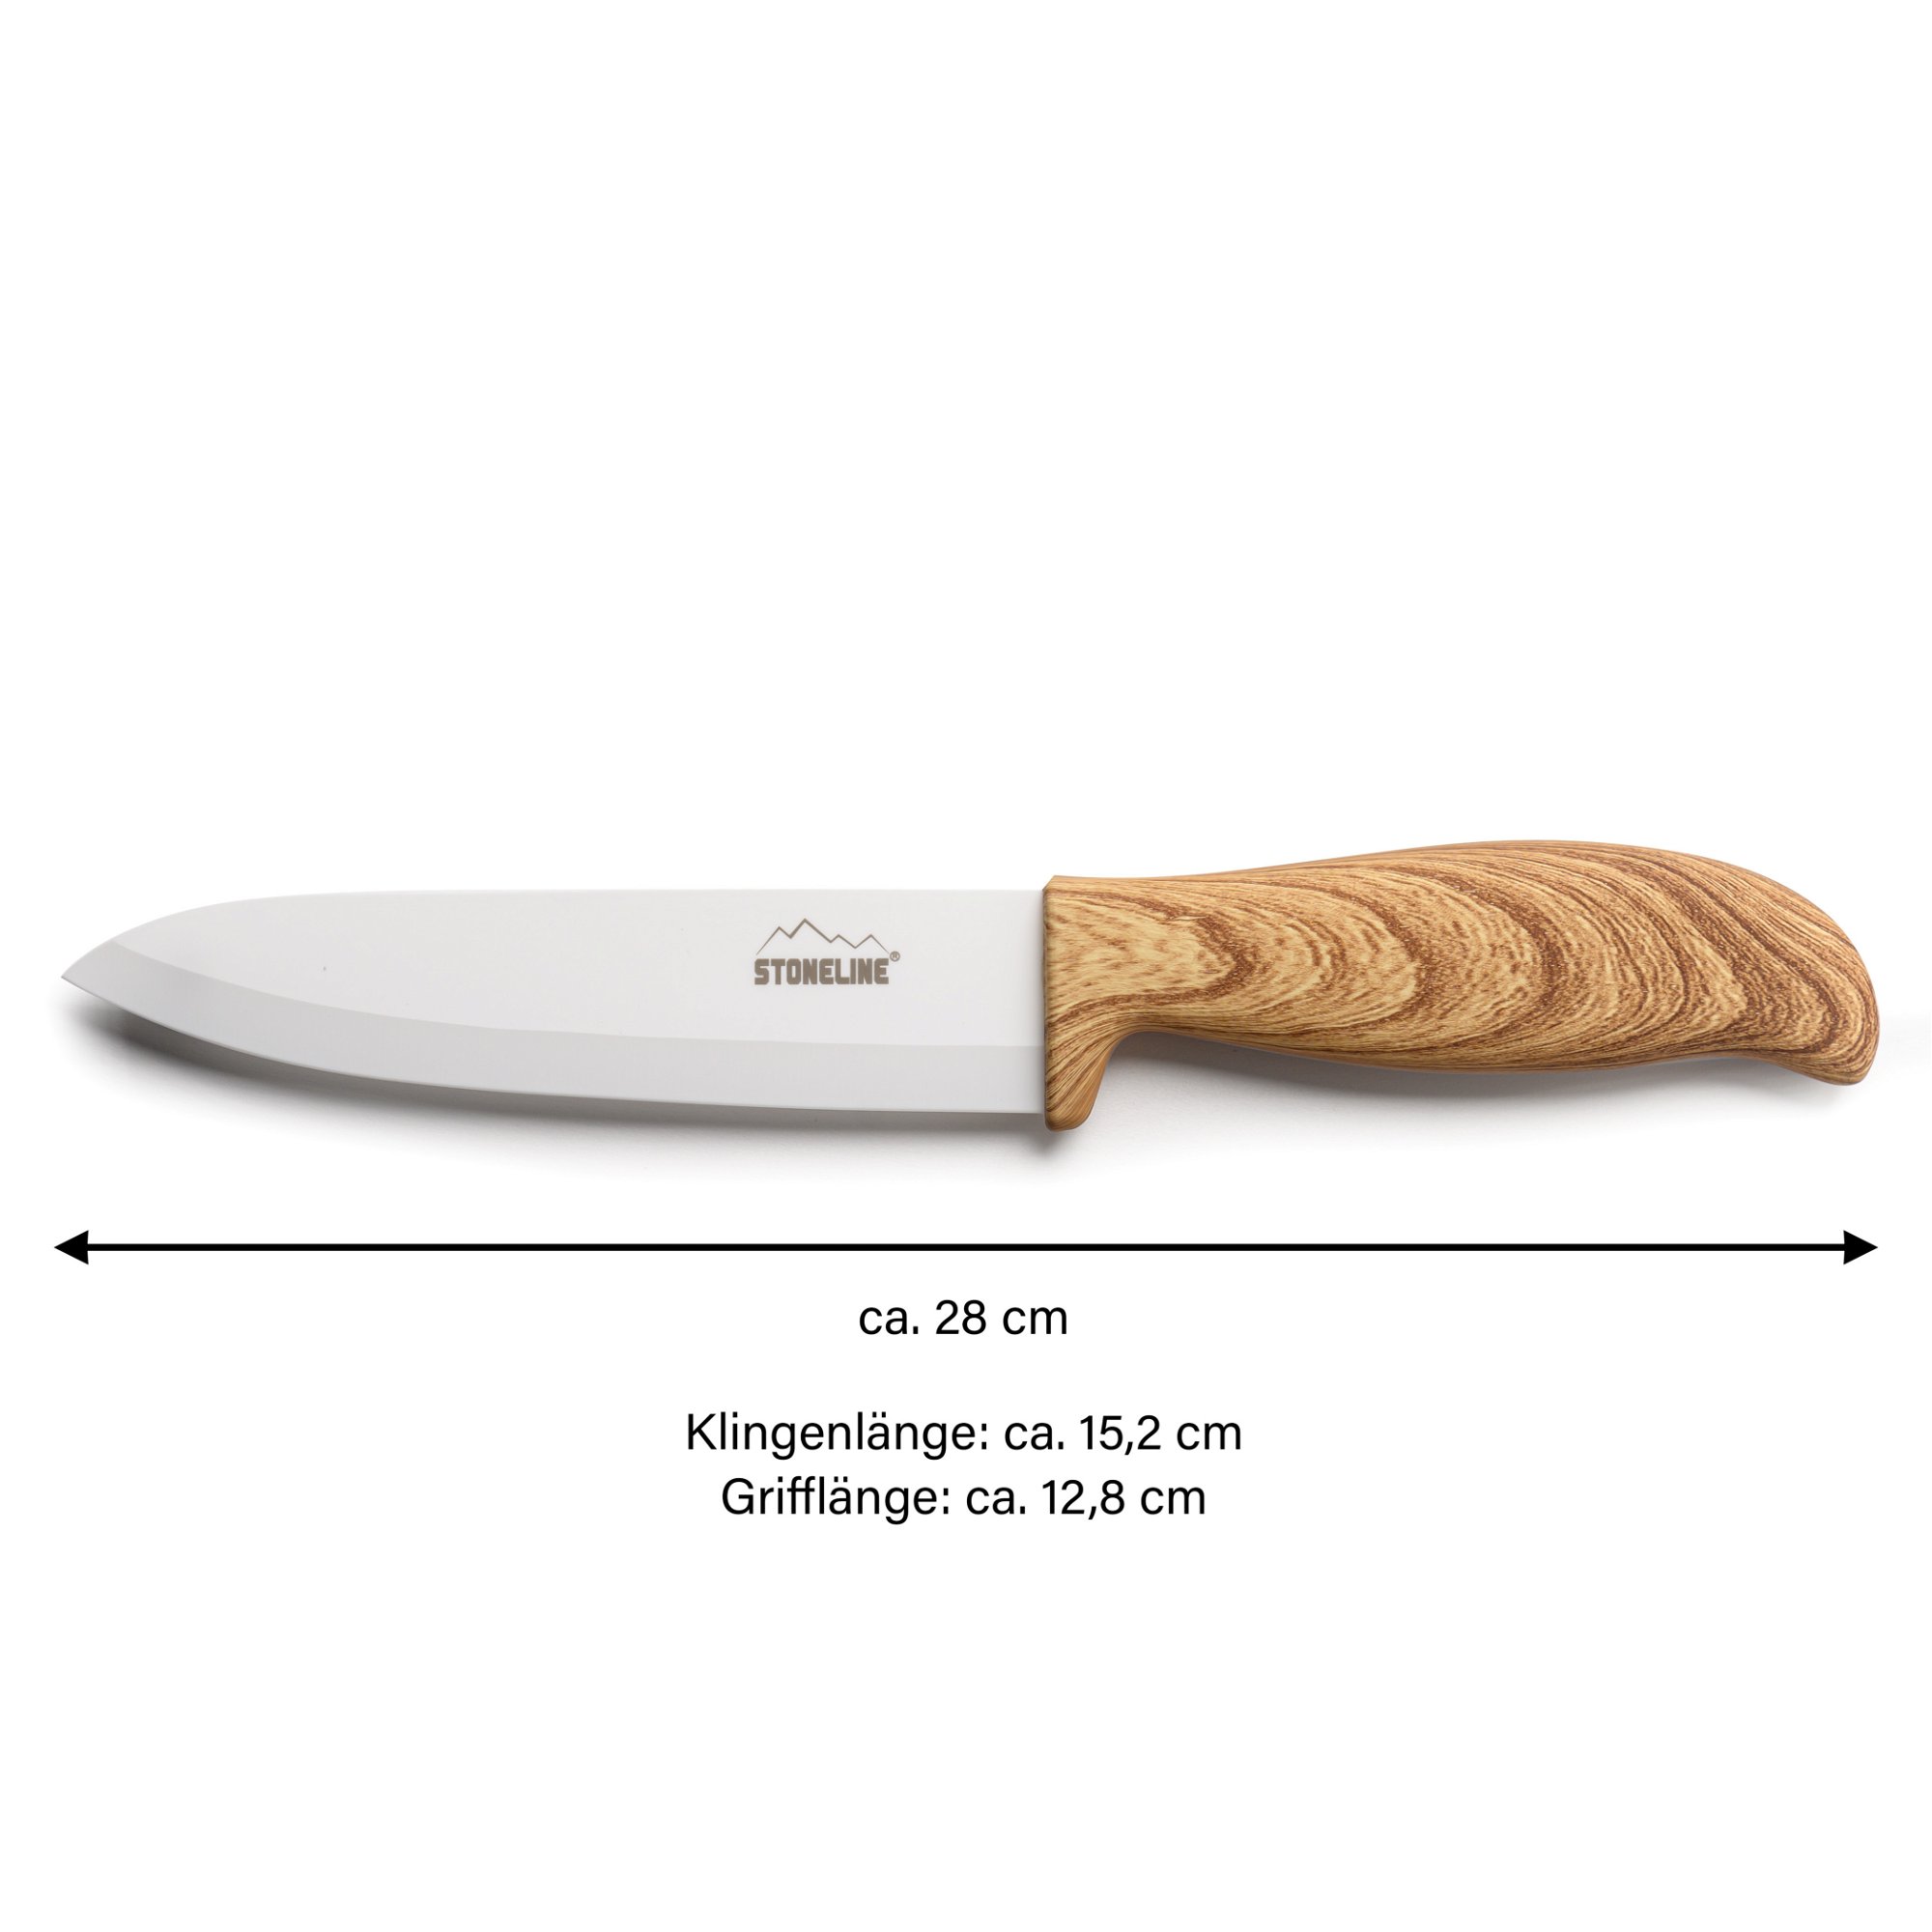 STONELINE® CERAMIC Knife 28 cm Chef's Knife, Safety Sheath | Back to Nature